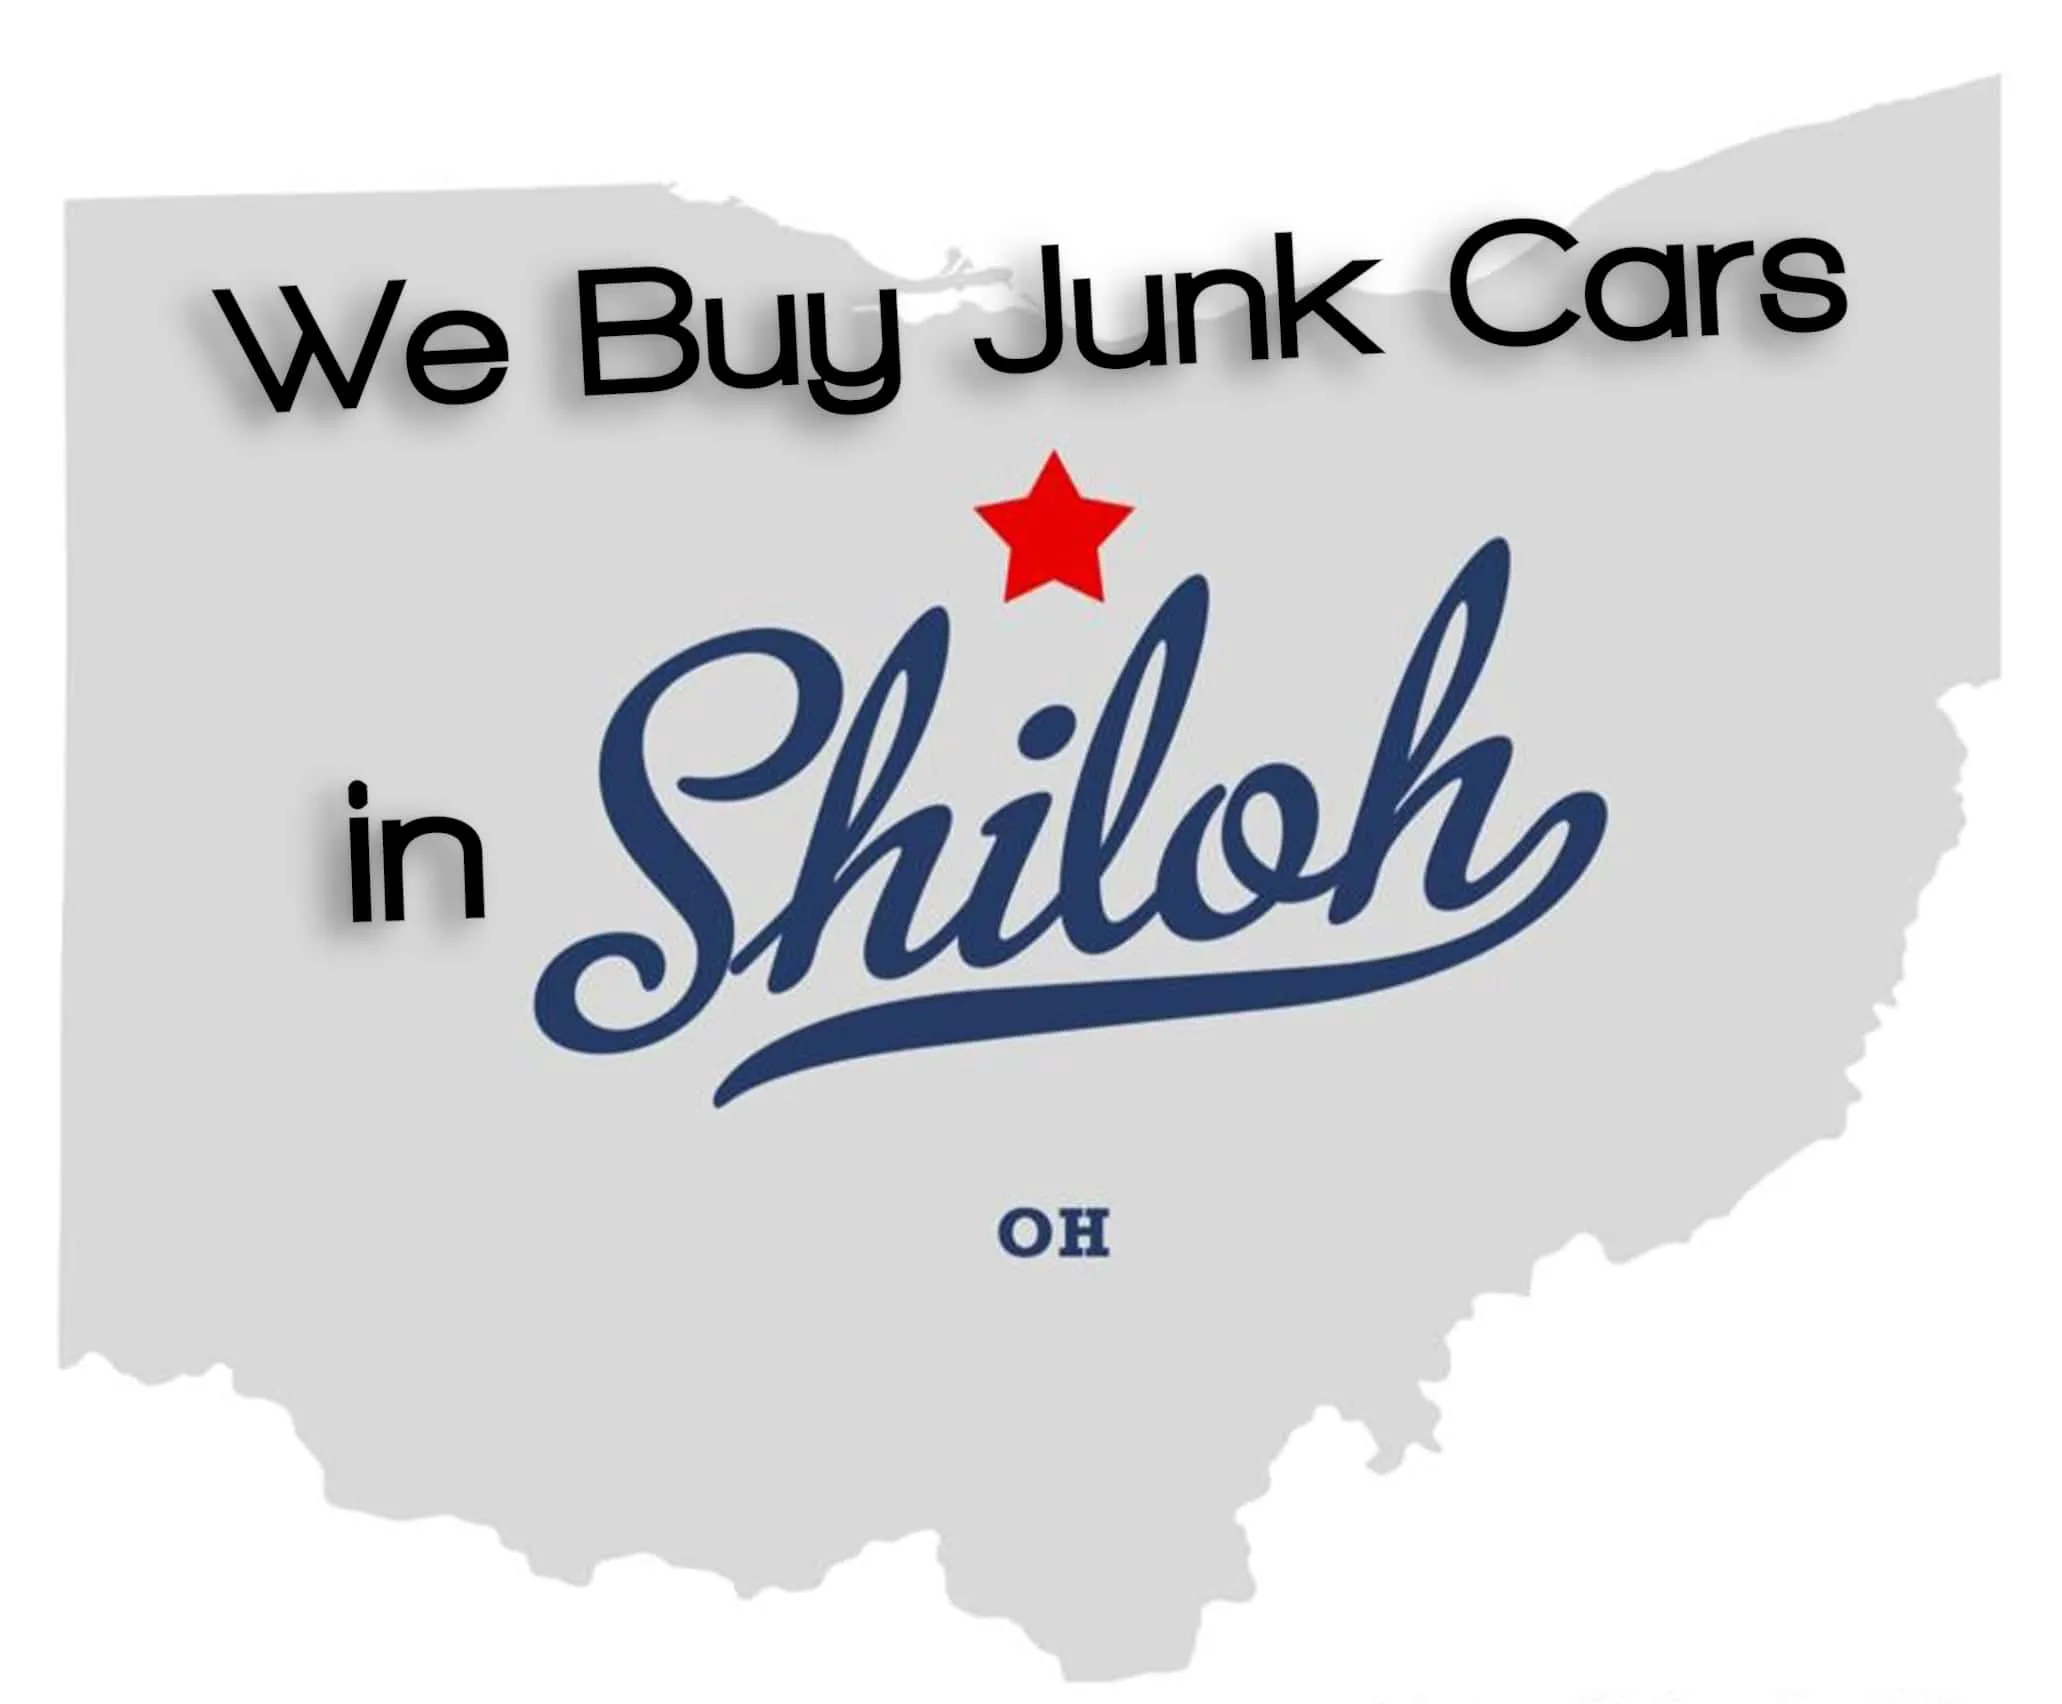 We Buy Junk Cars in Shiloh Ohio